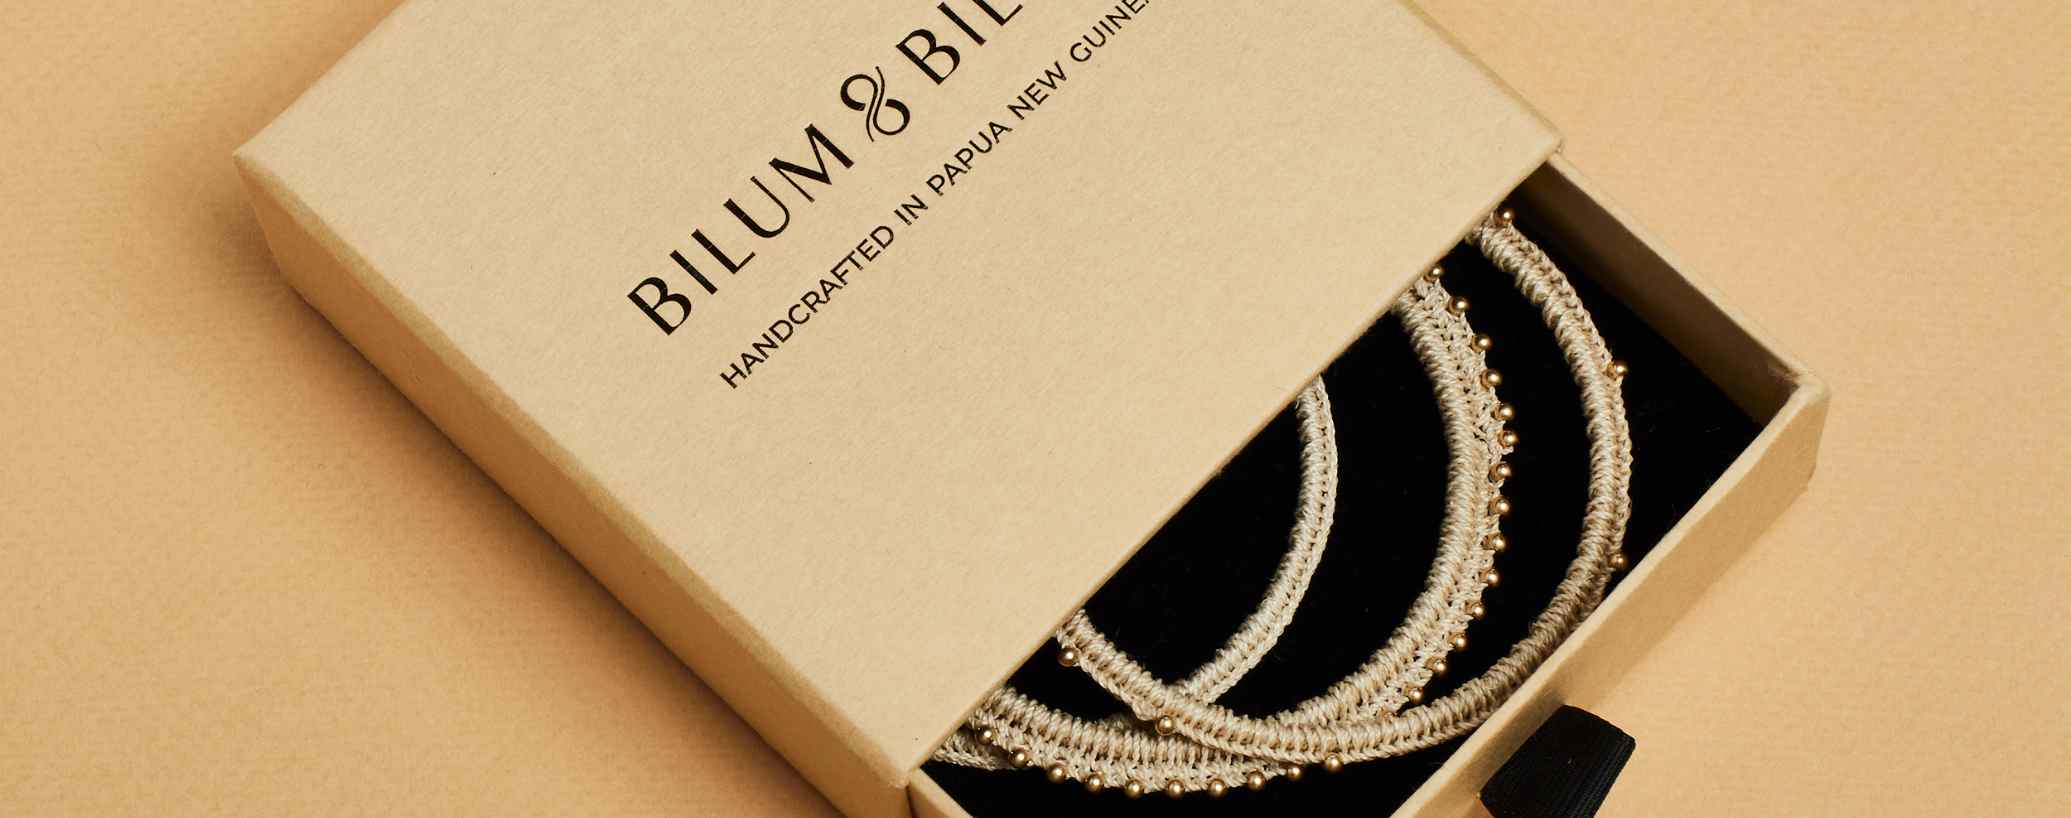 Bilum and Bilas bracelets in a Bilum and Bilas branded jewellery box 